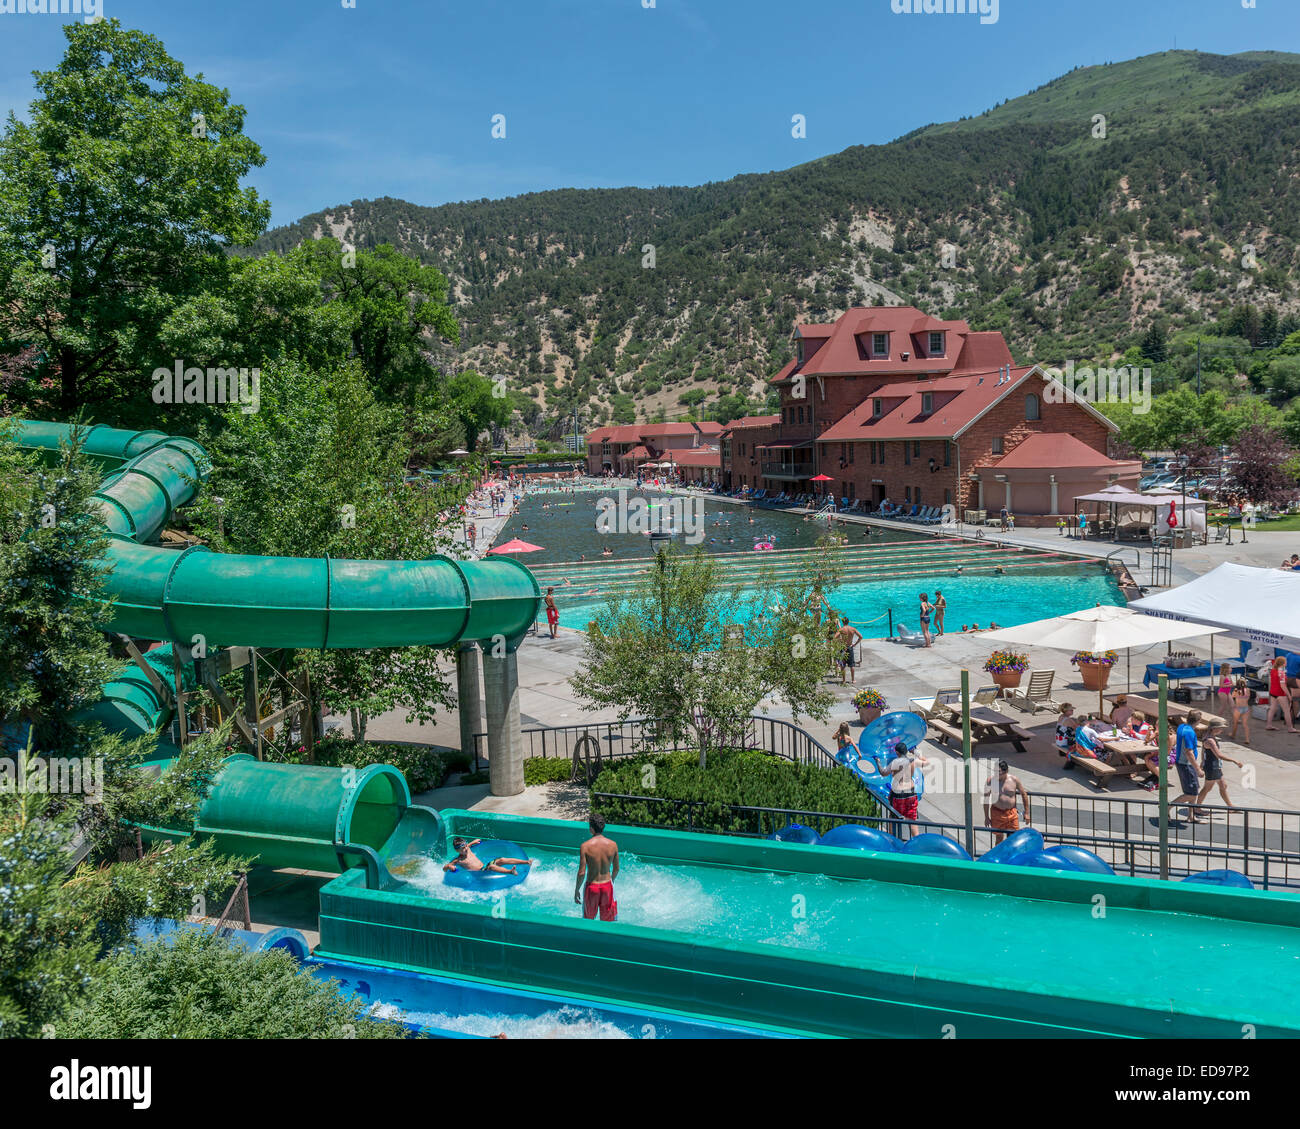 Glenwood Hot Springs Lodge and Pool in Glenwood Springs. Colorado. USA Stock Photo